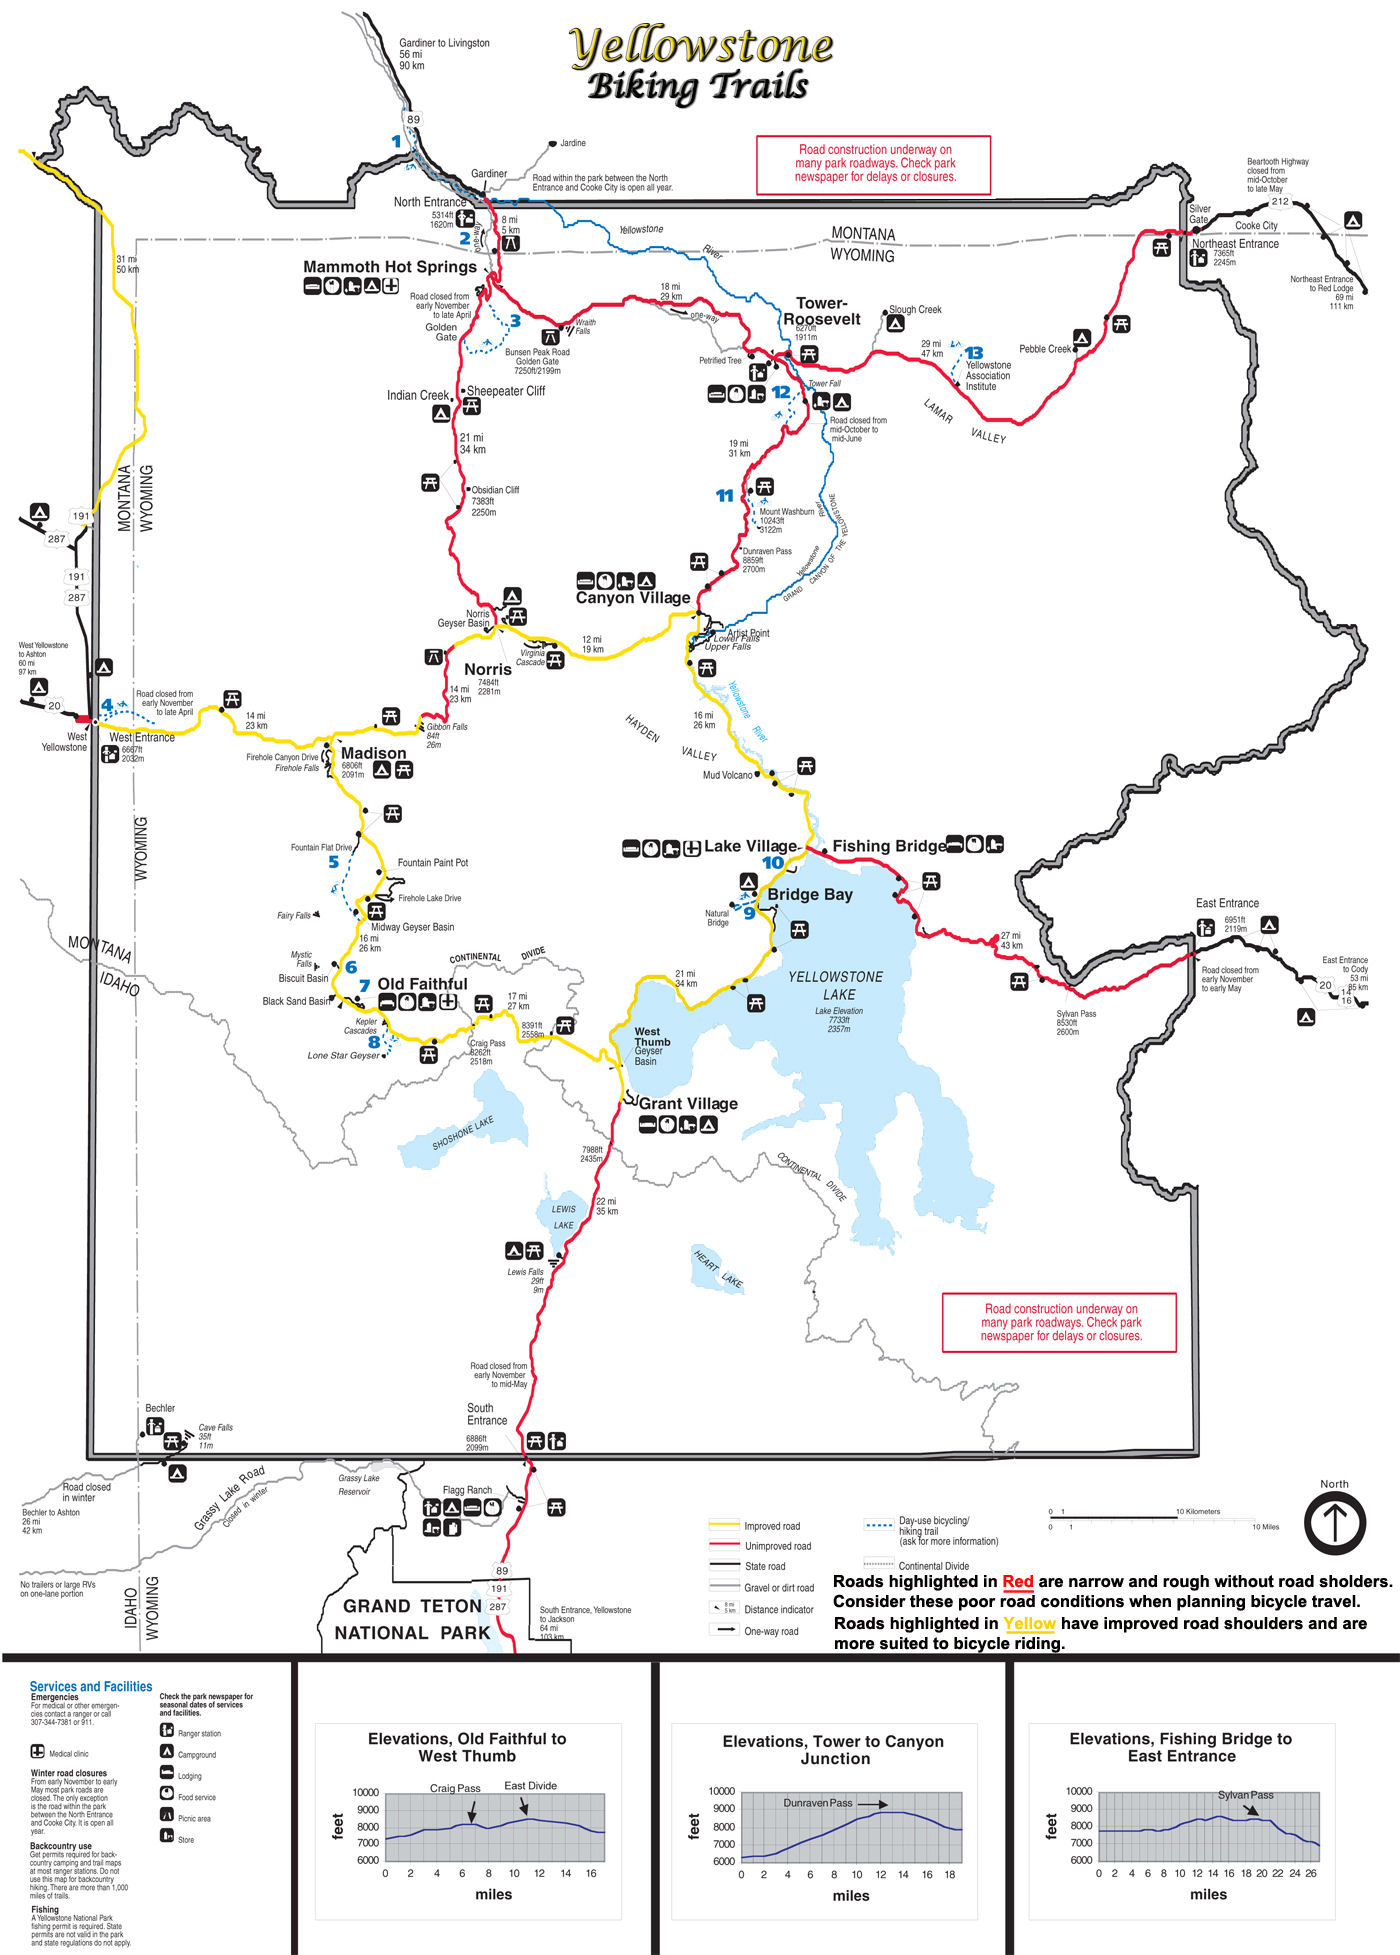 Yellowstone National Park Biking Map - NPS Document